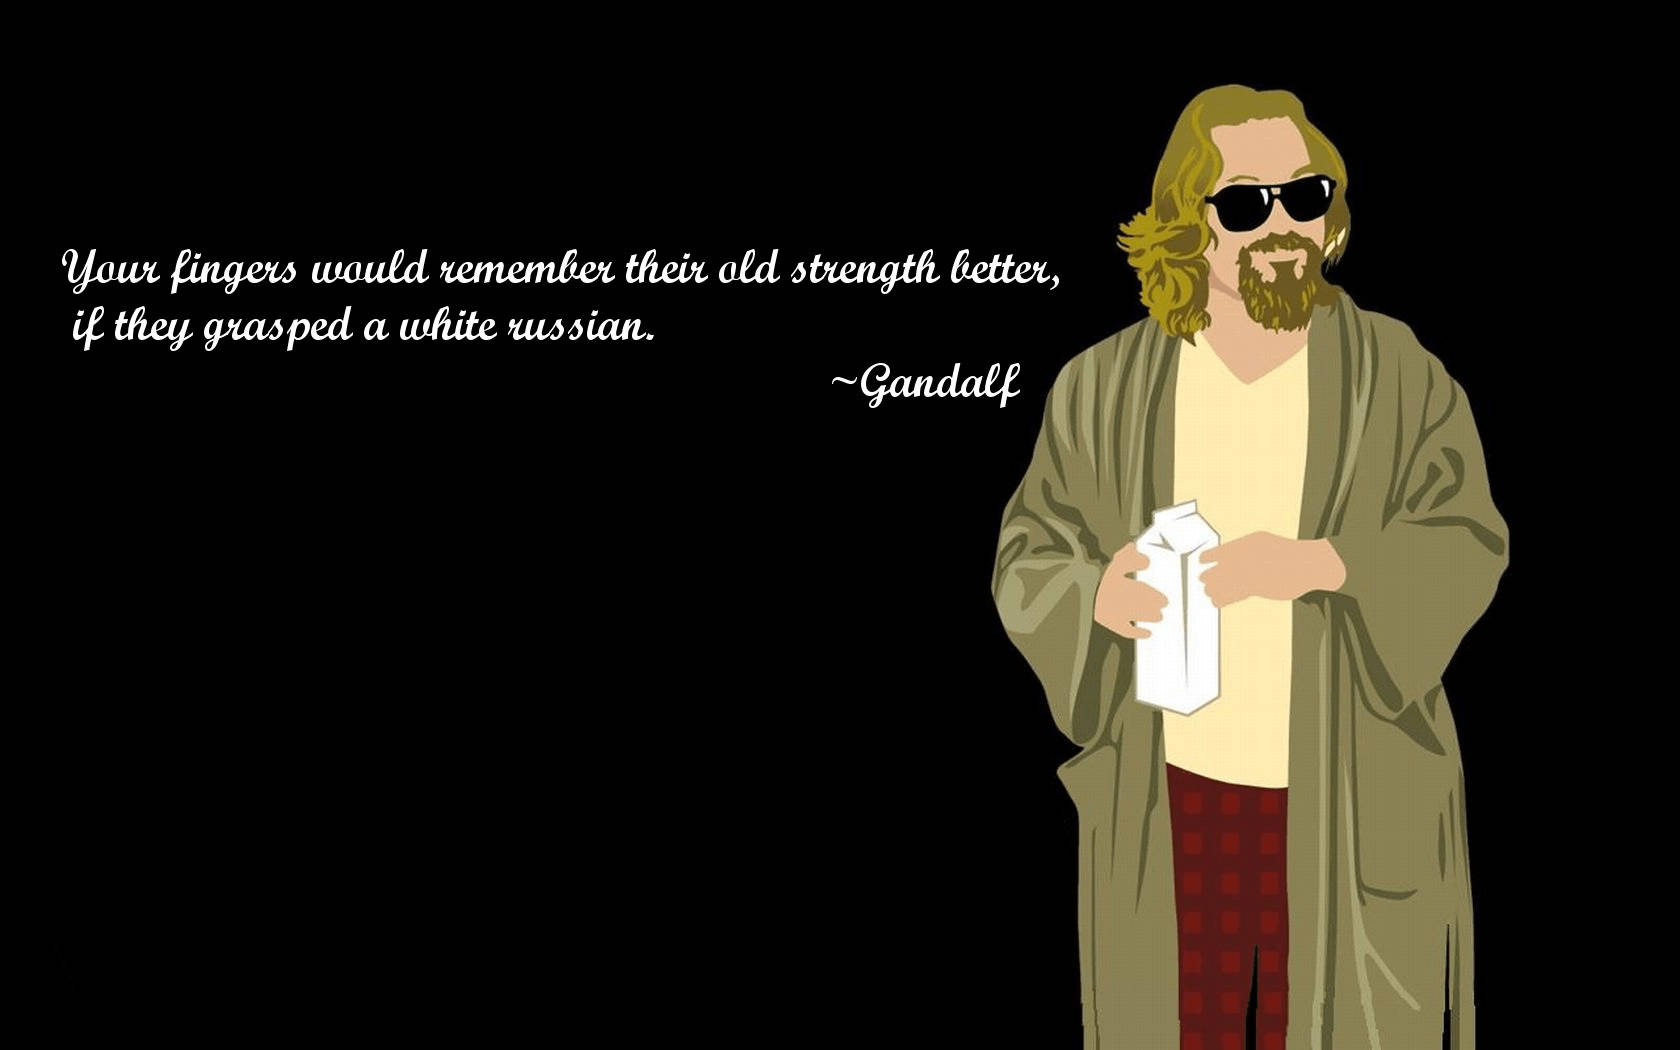 Download The Big Lebowski The Dude Gandalf Quote Art Wallpaper | Wallpapers .com